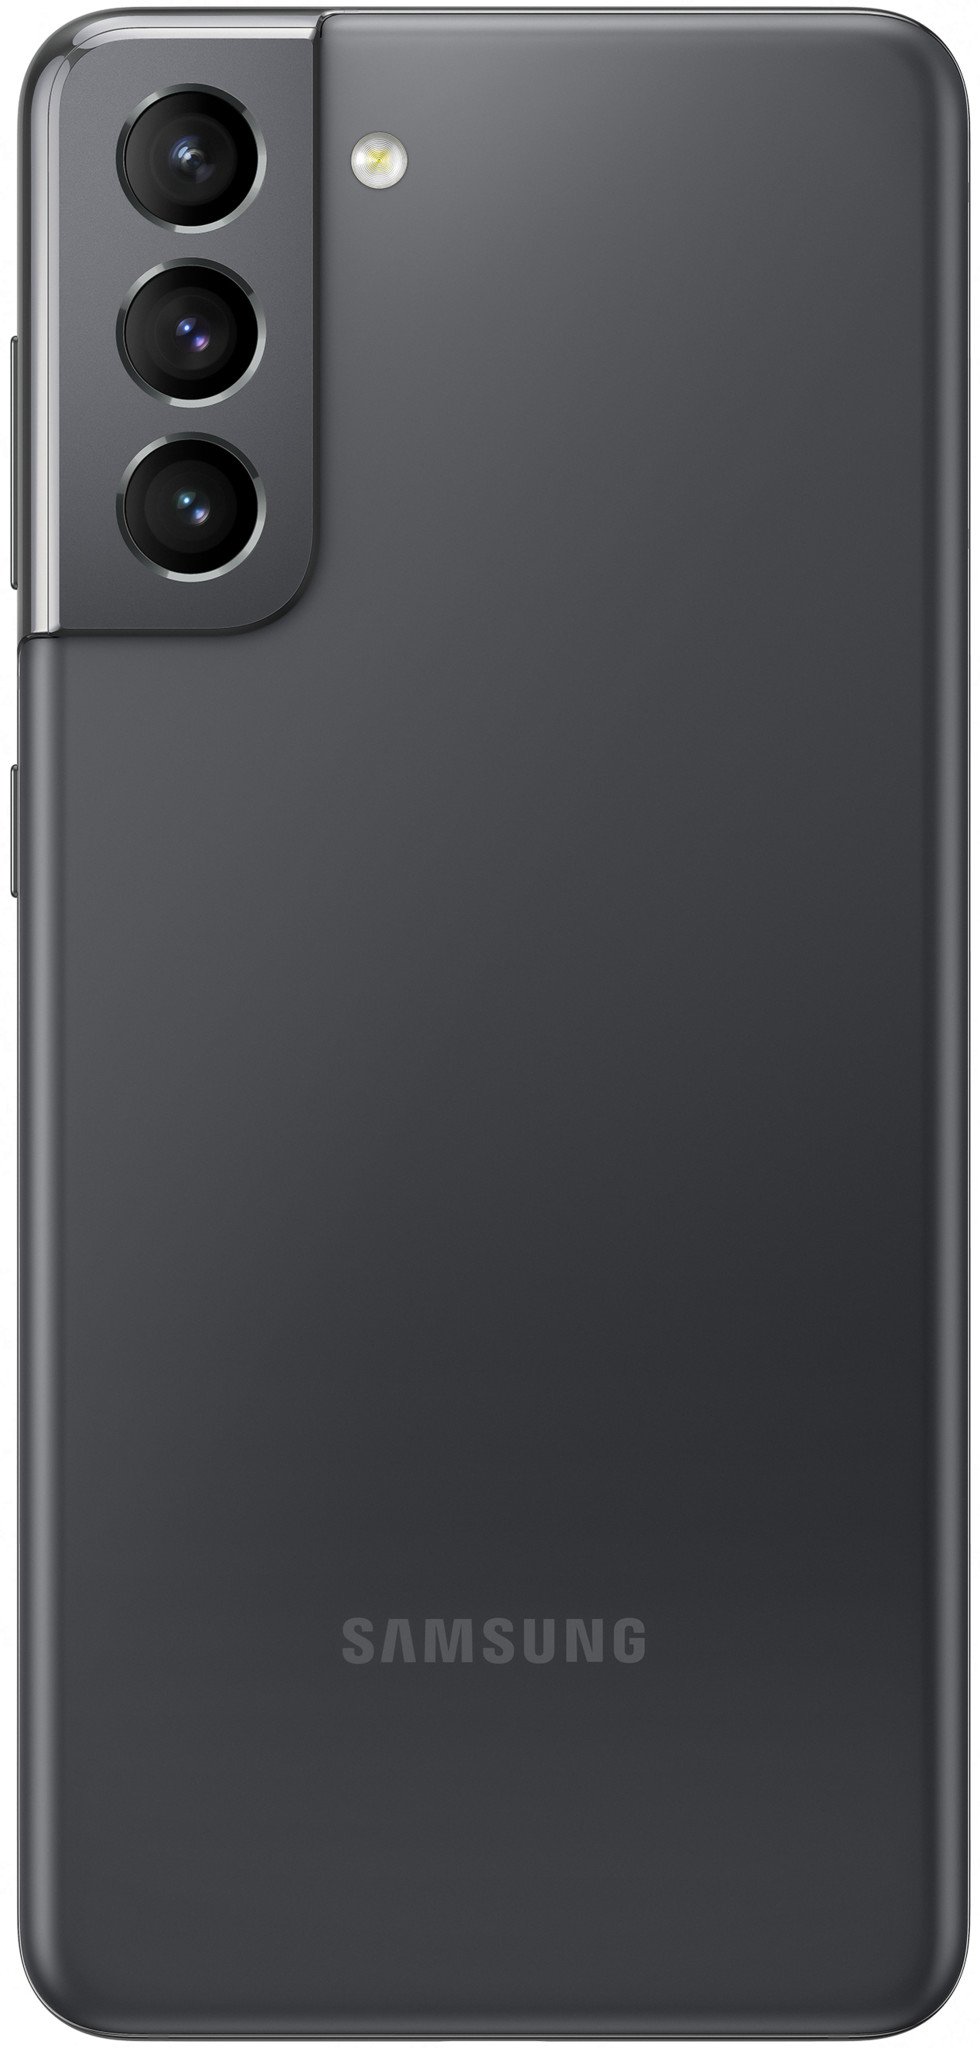 Samsung Galaxy S21 in Phantom Gray